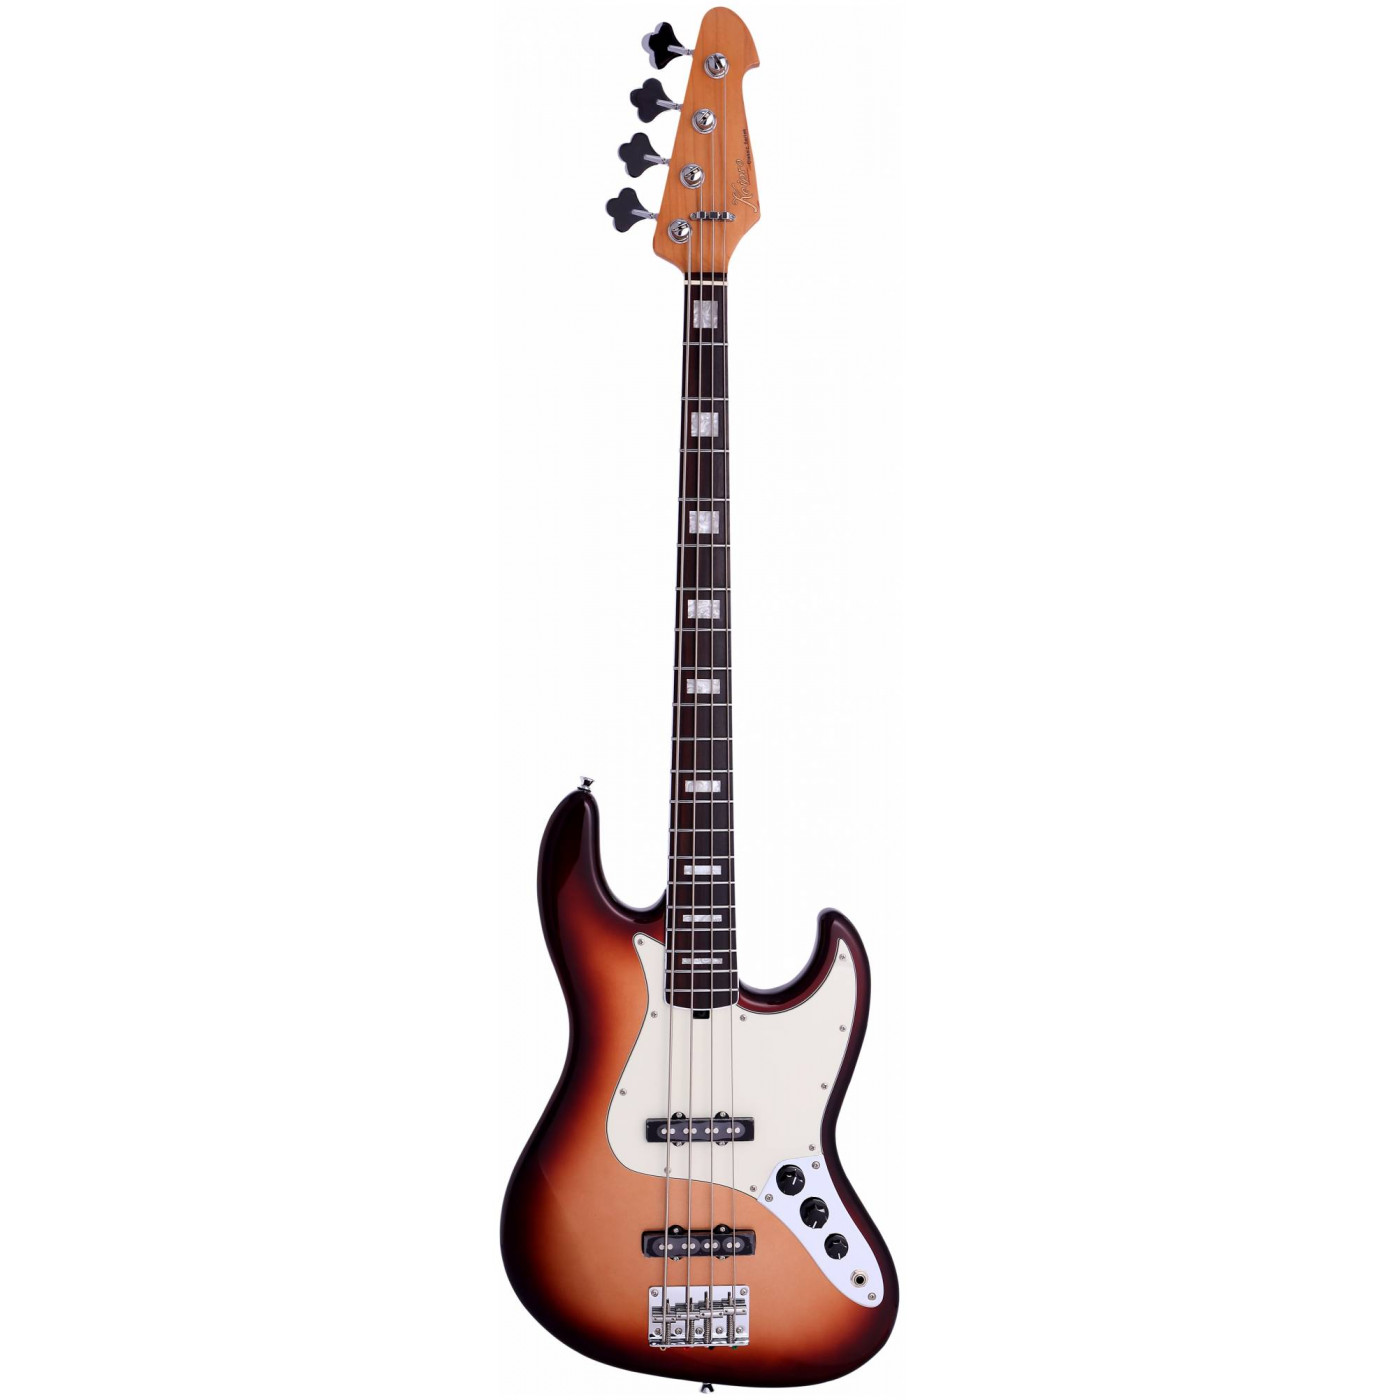 Бас-гитары Keipro KJB-Classic-R MTHB (чехол в комплекте) чехол для гитары с мензурой 610 мм утеплённый 98 х 38 х 12 см